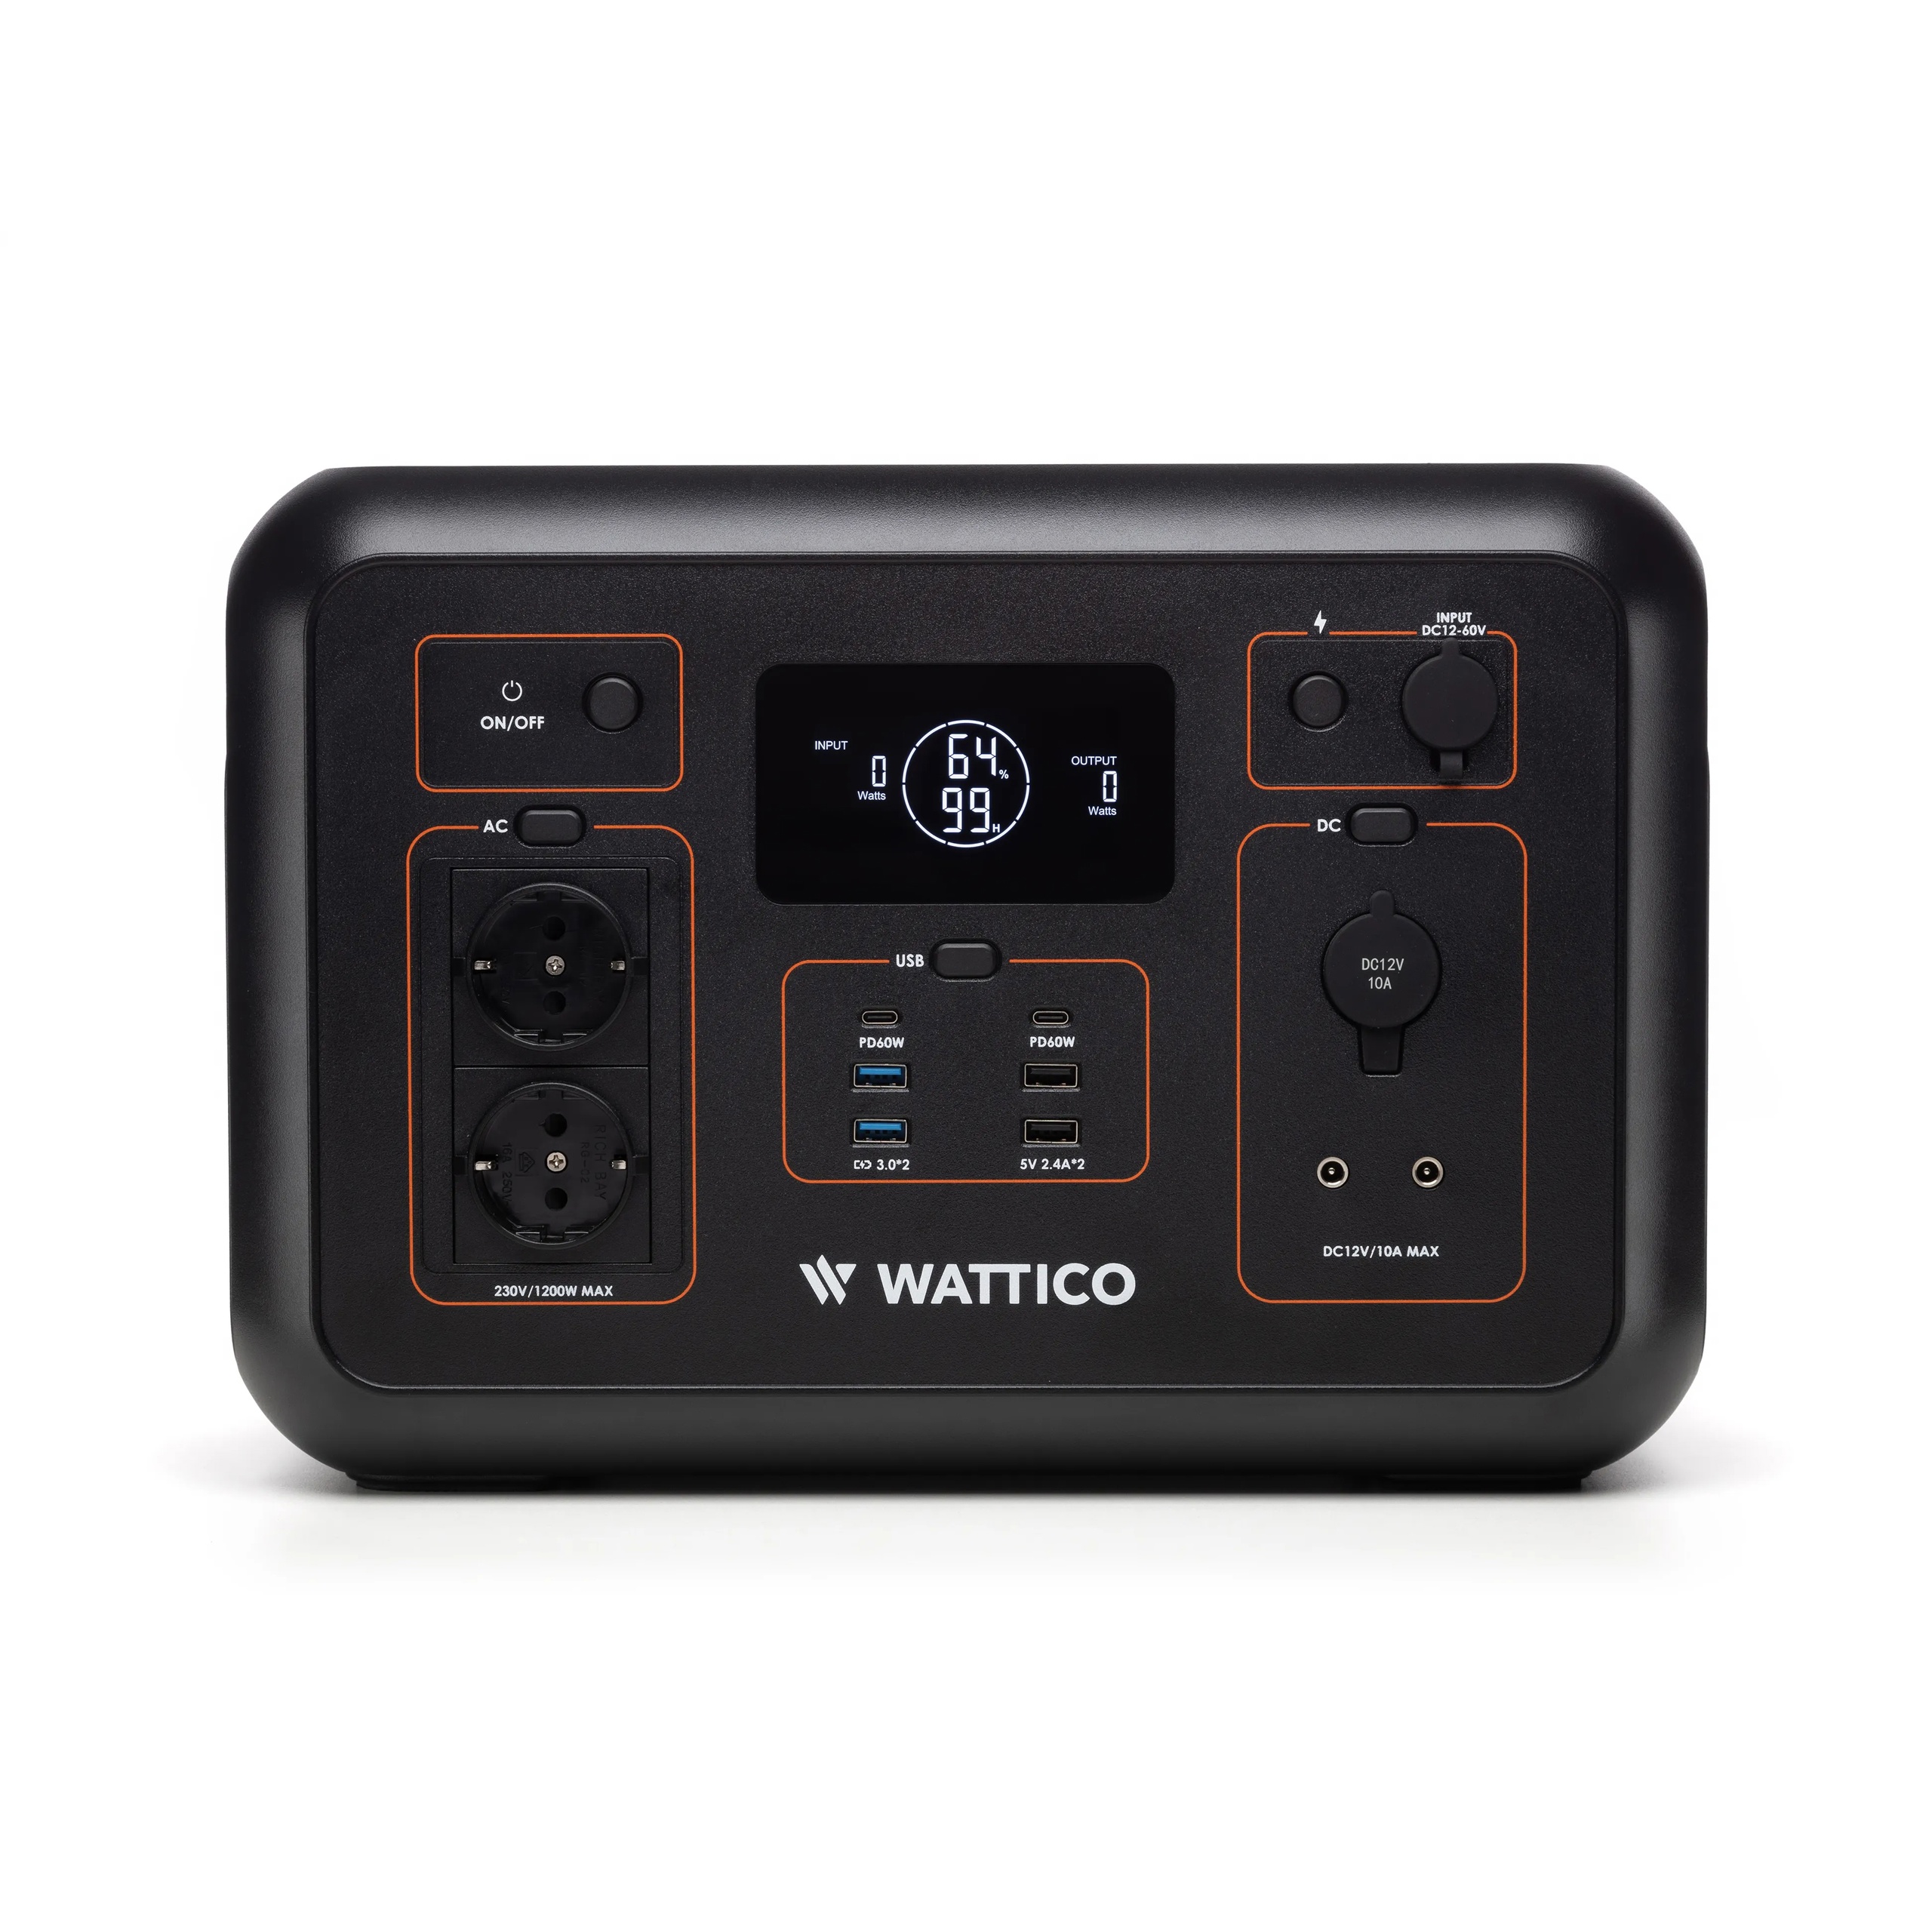 Портативная электростанция WATTICO Home 1200 MAX